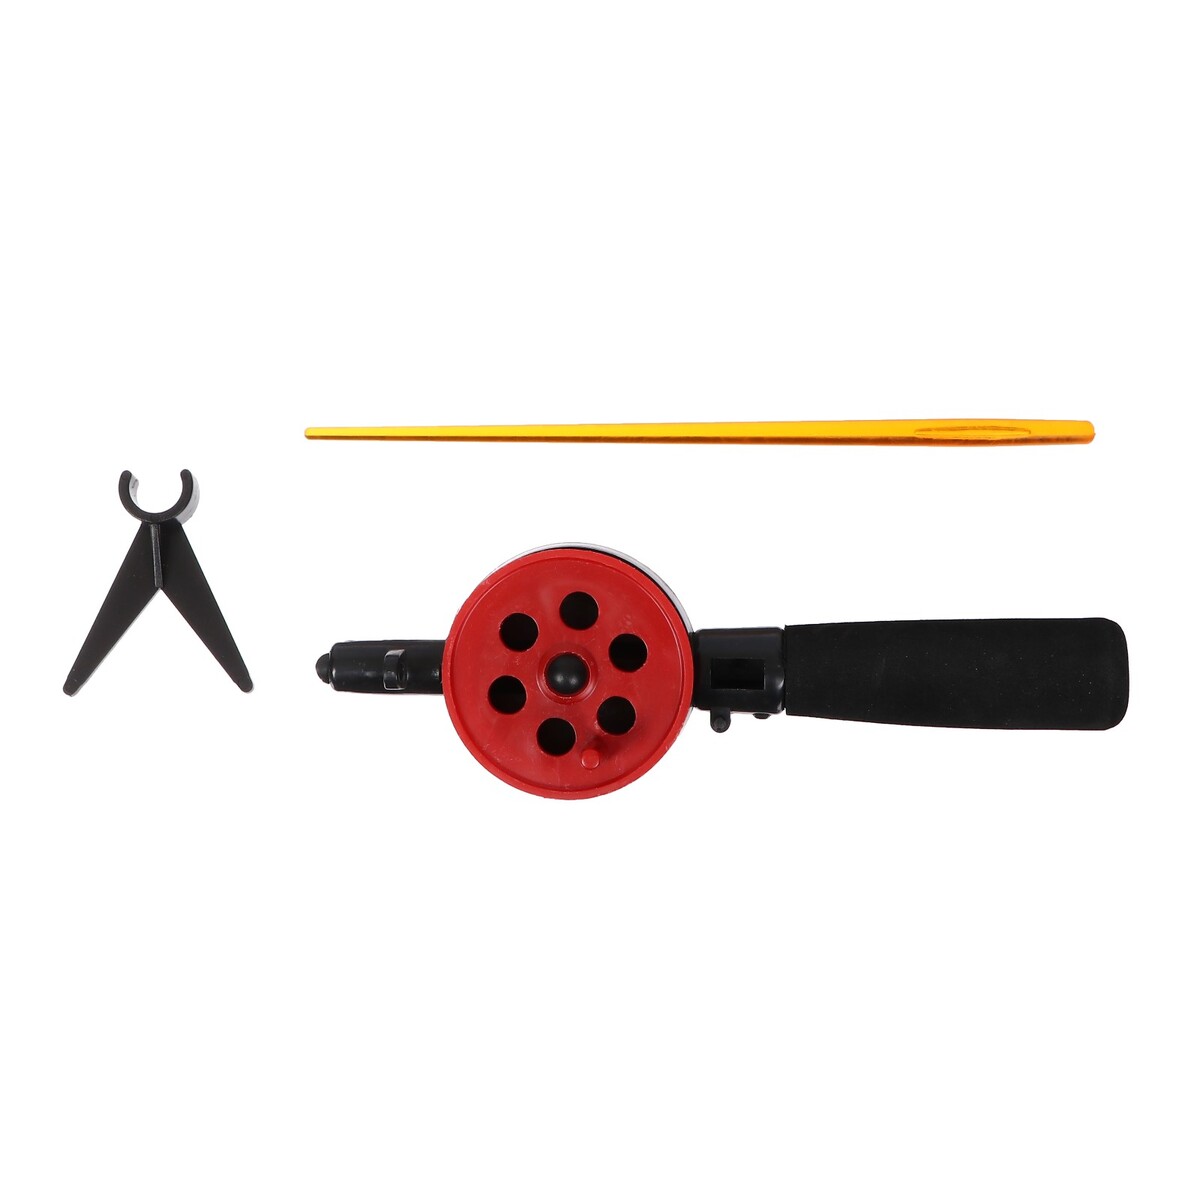 фото Удочка зимняя, ручка неопрен, диаметр катушки 5.5 см, катушка красная, hfb-8 no brand